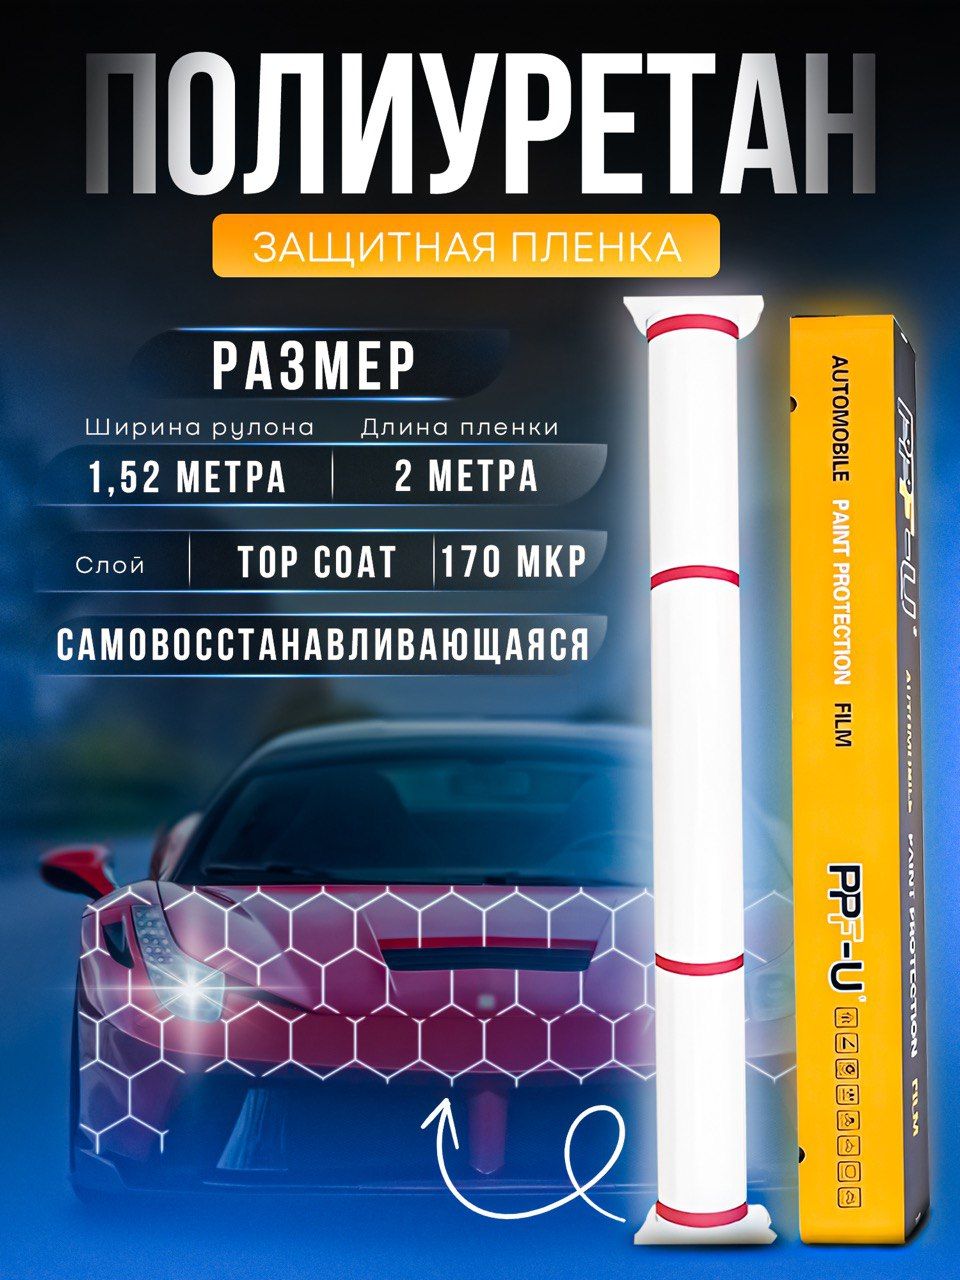 Защитная пленка PPH-U 1.52*2 м, для авто, полиуретан